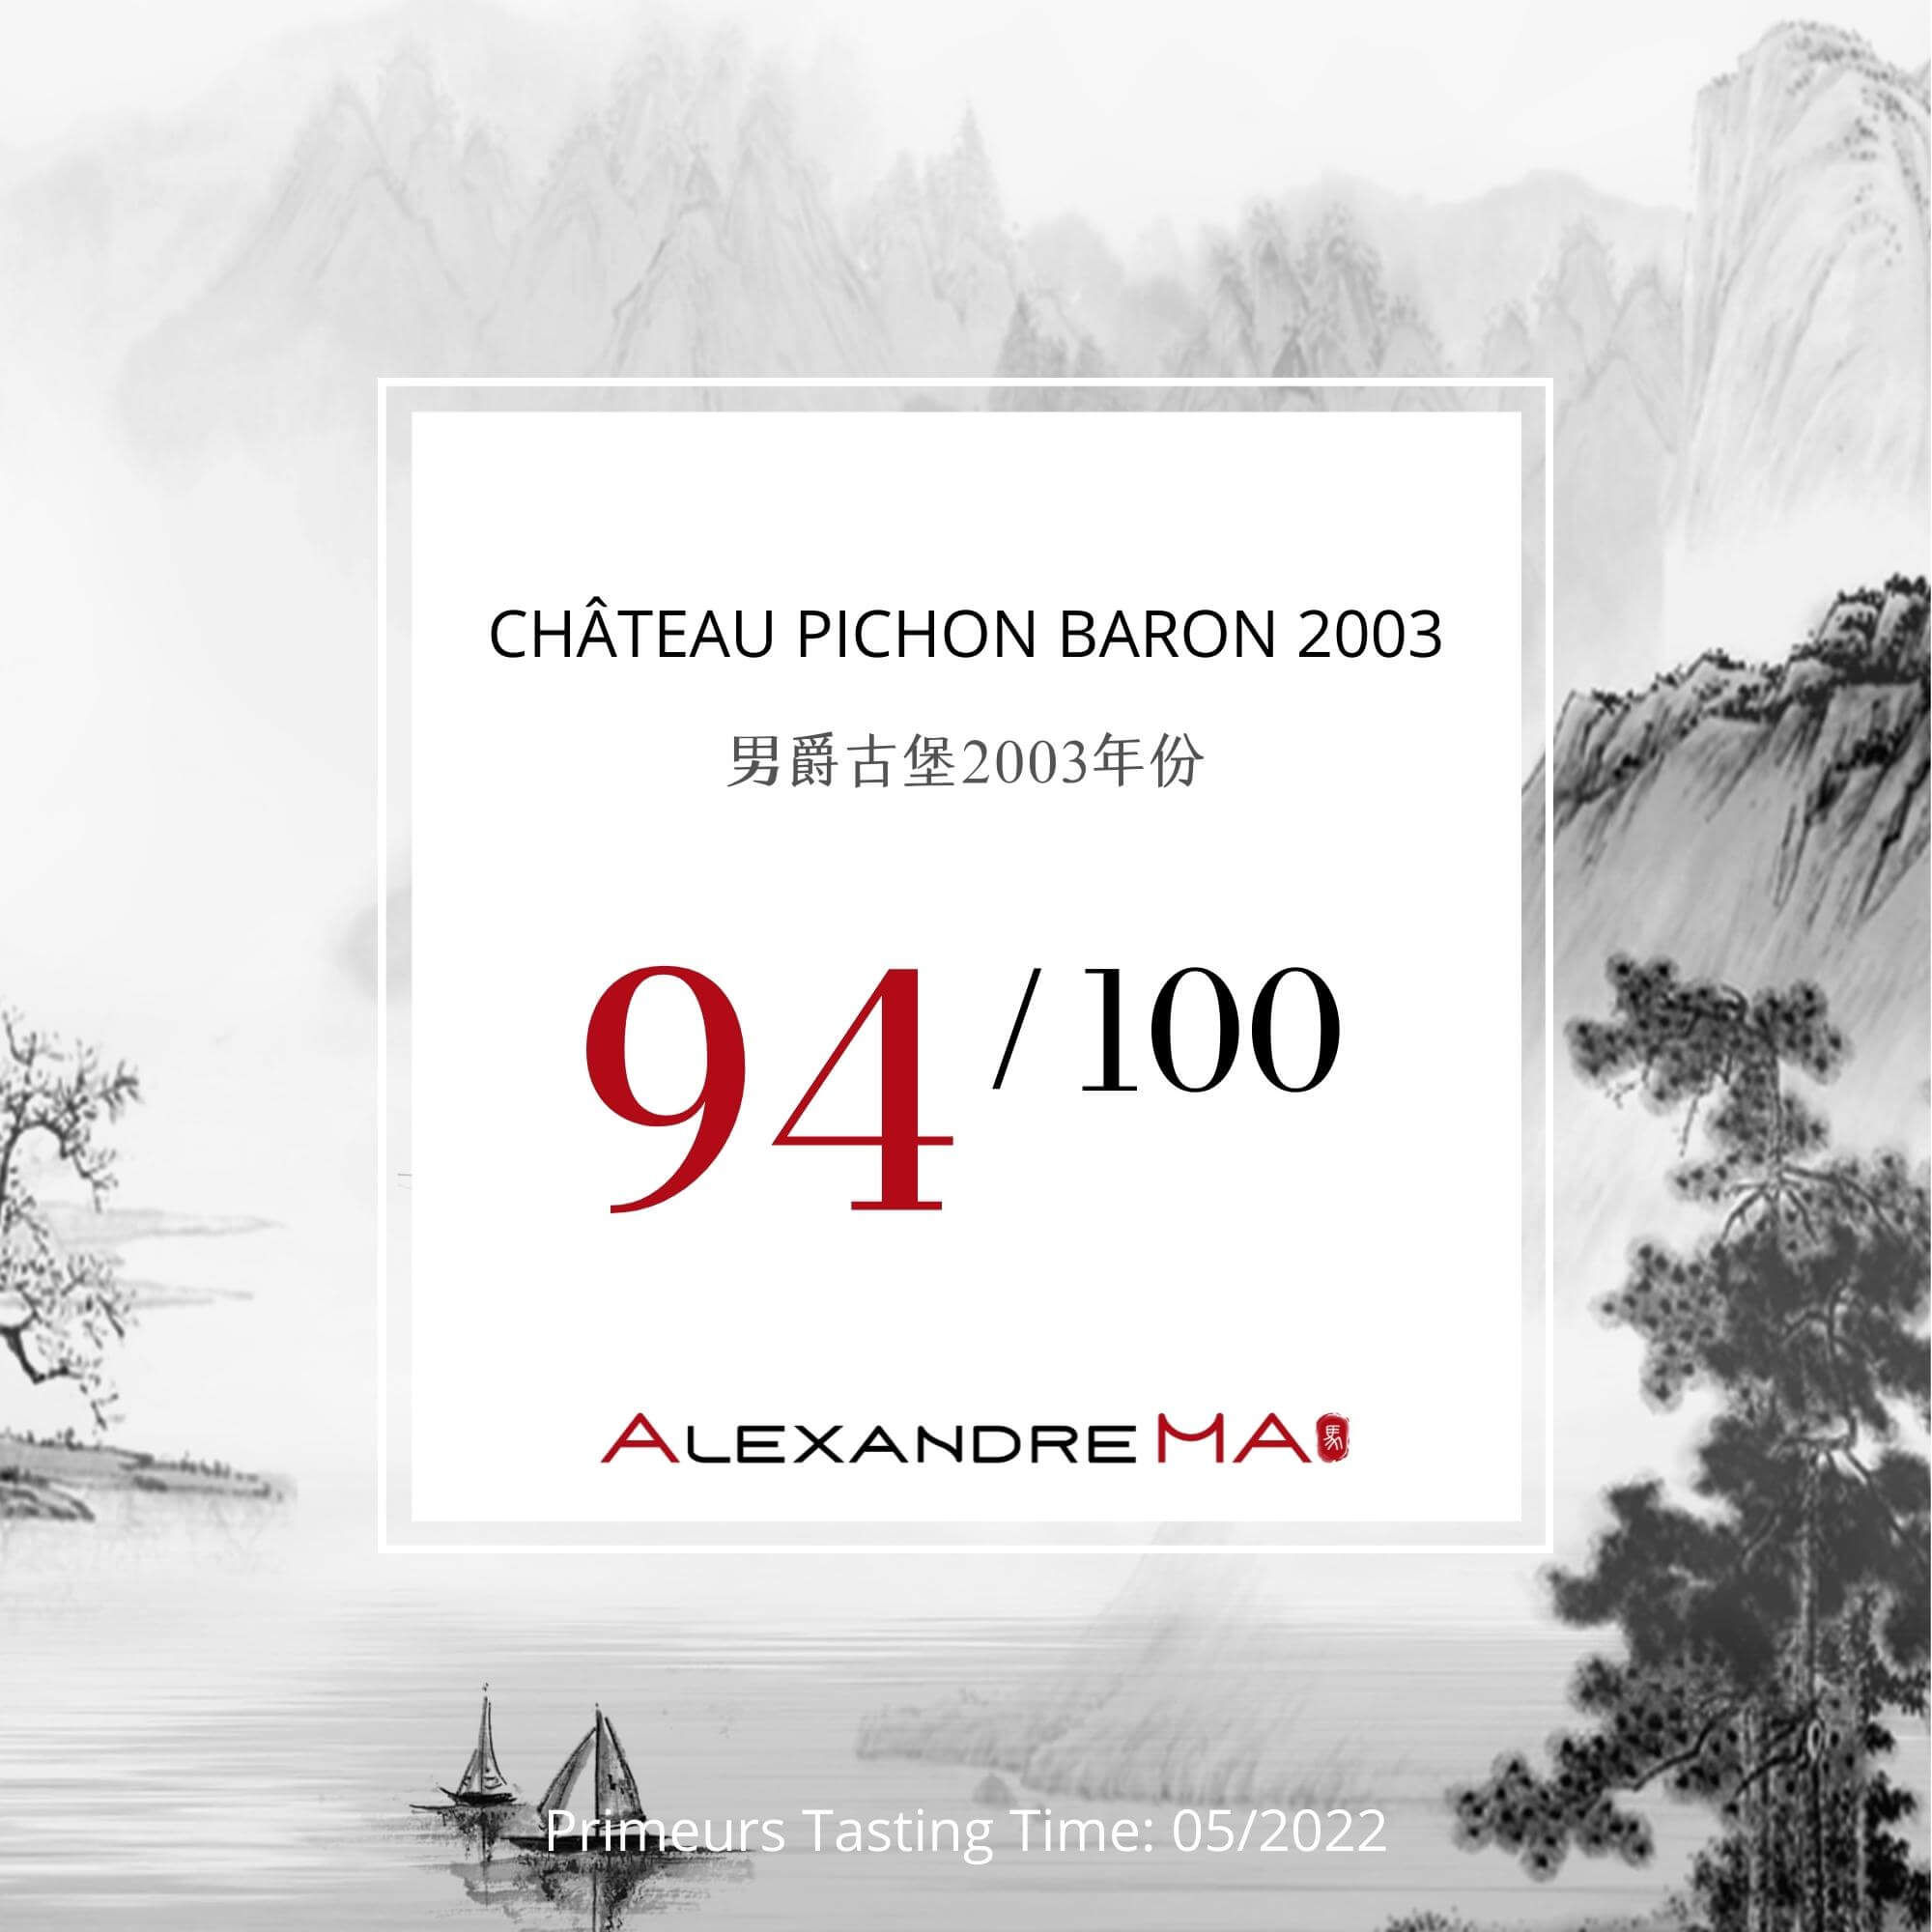 Château Pichon Baron 2003 - Alexandre MA